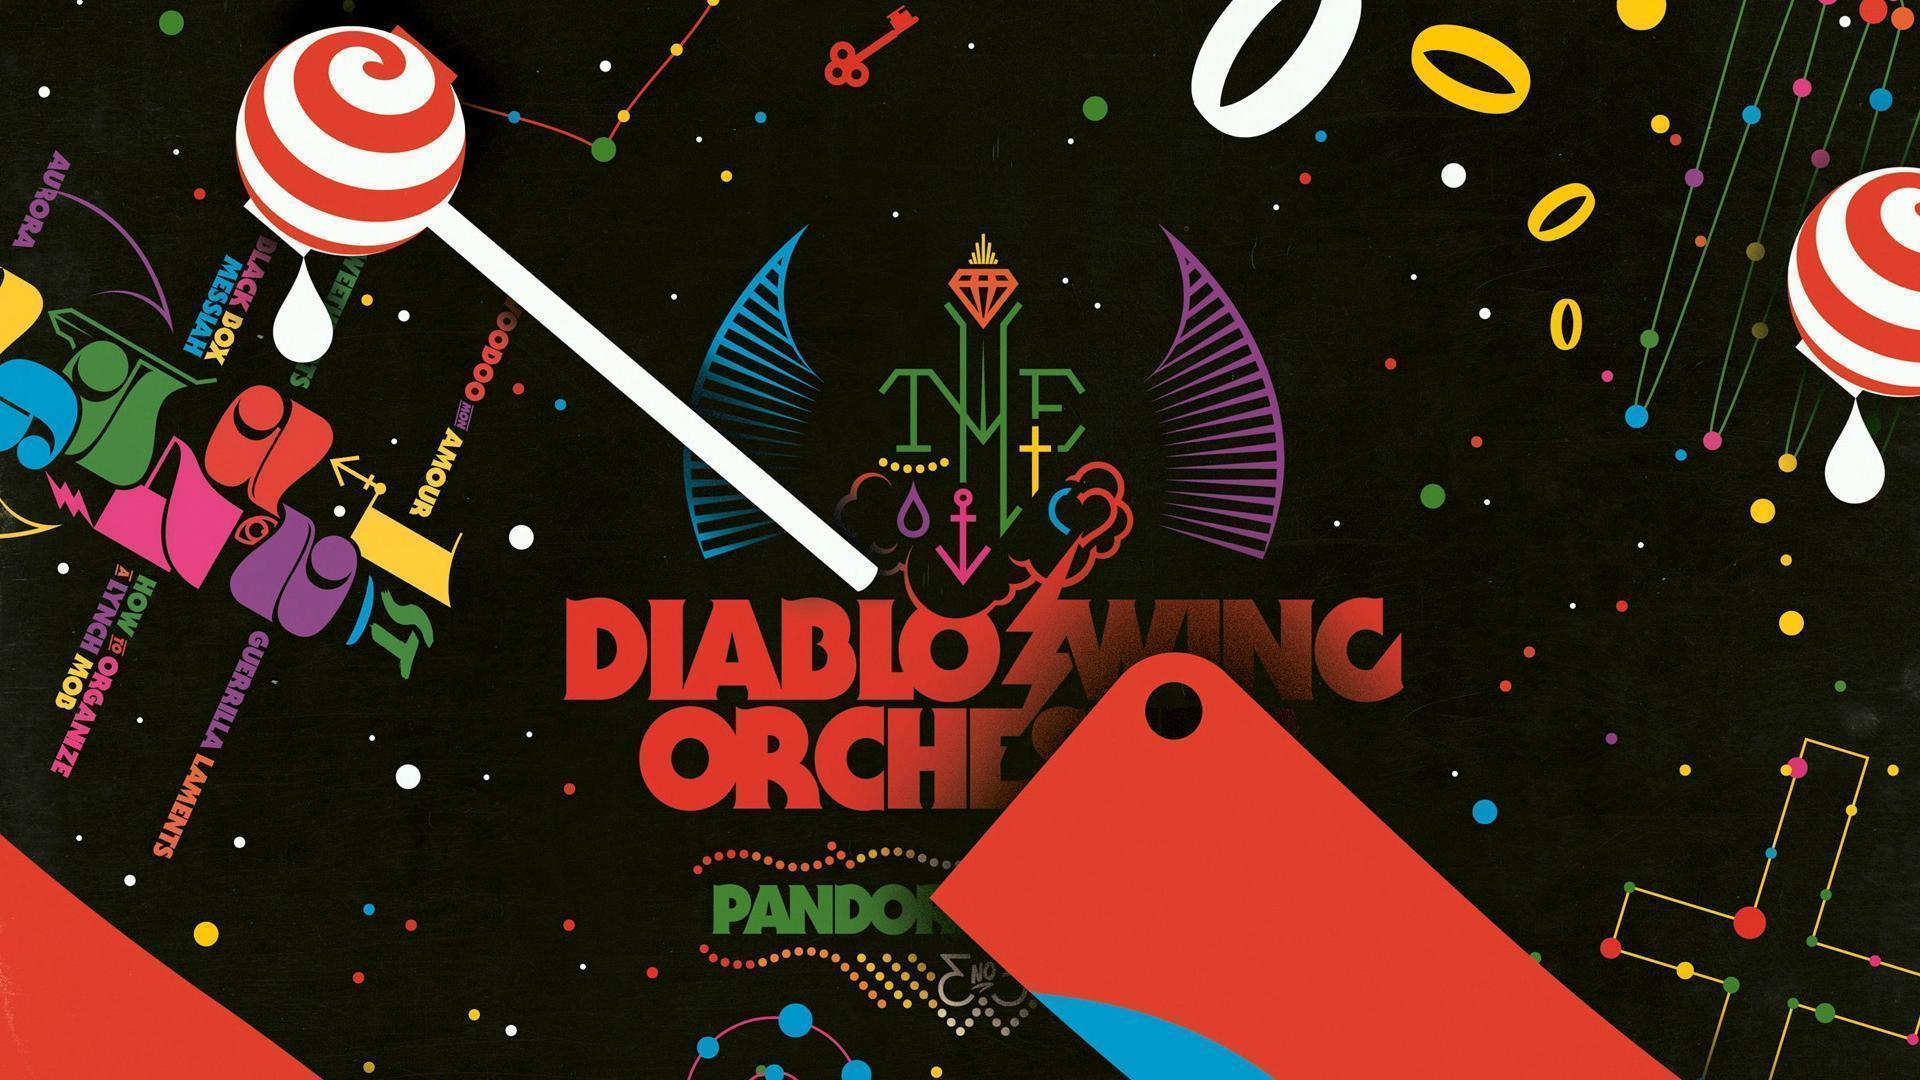 Diablo Swing Orchestra Piñata [1920x1080]